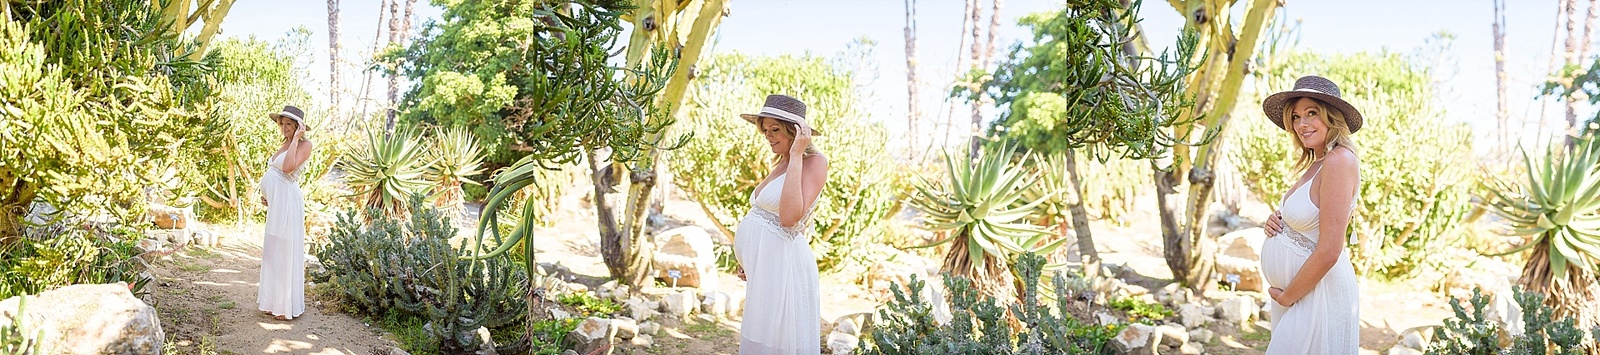 Desert maternity photoshoot - what to wear